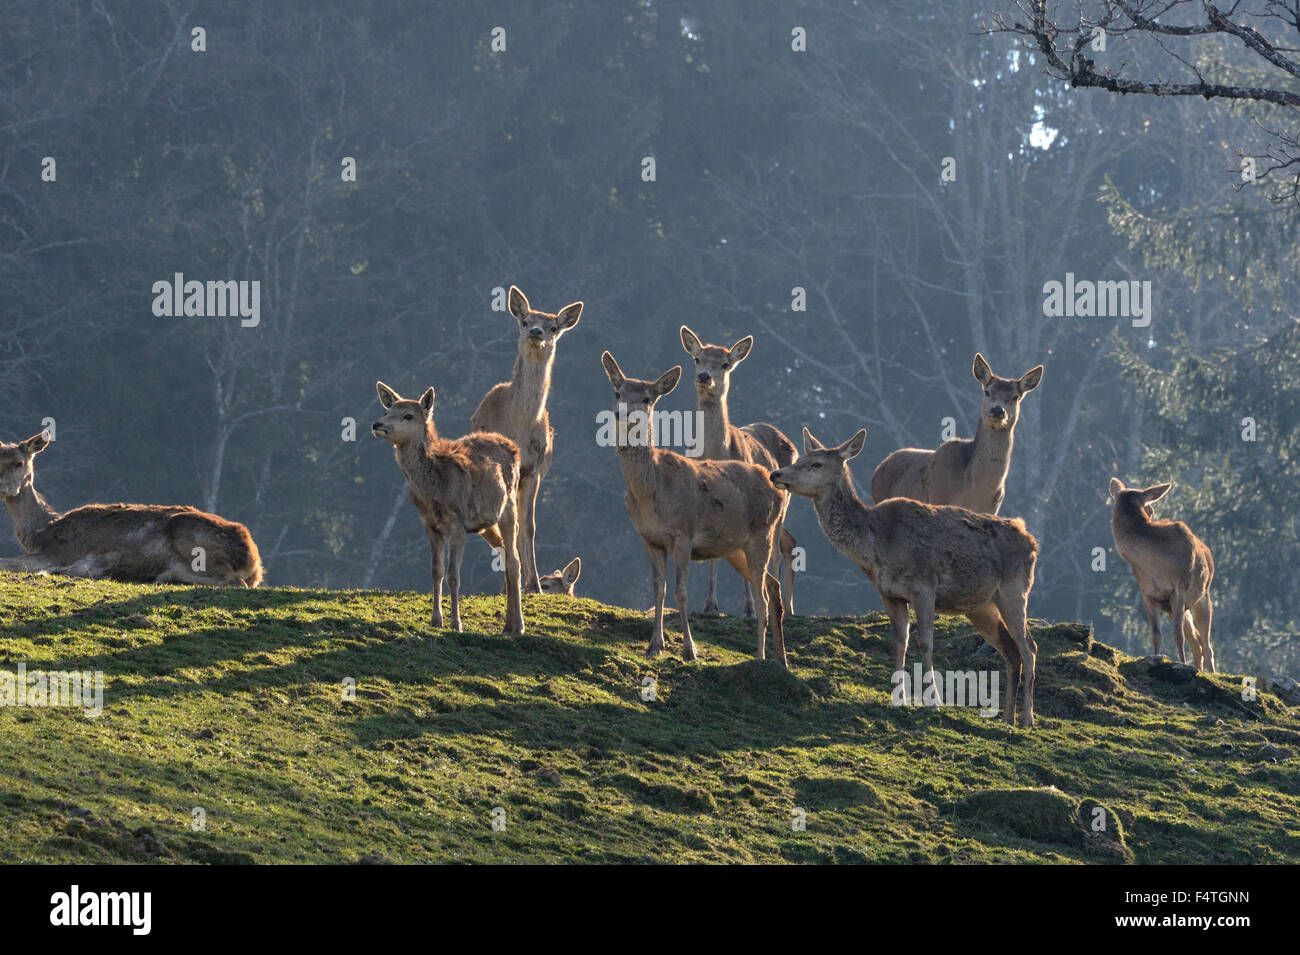 Deer, Stags, Stock Photo